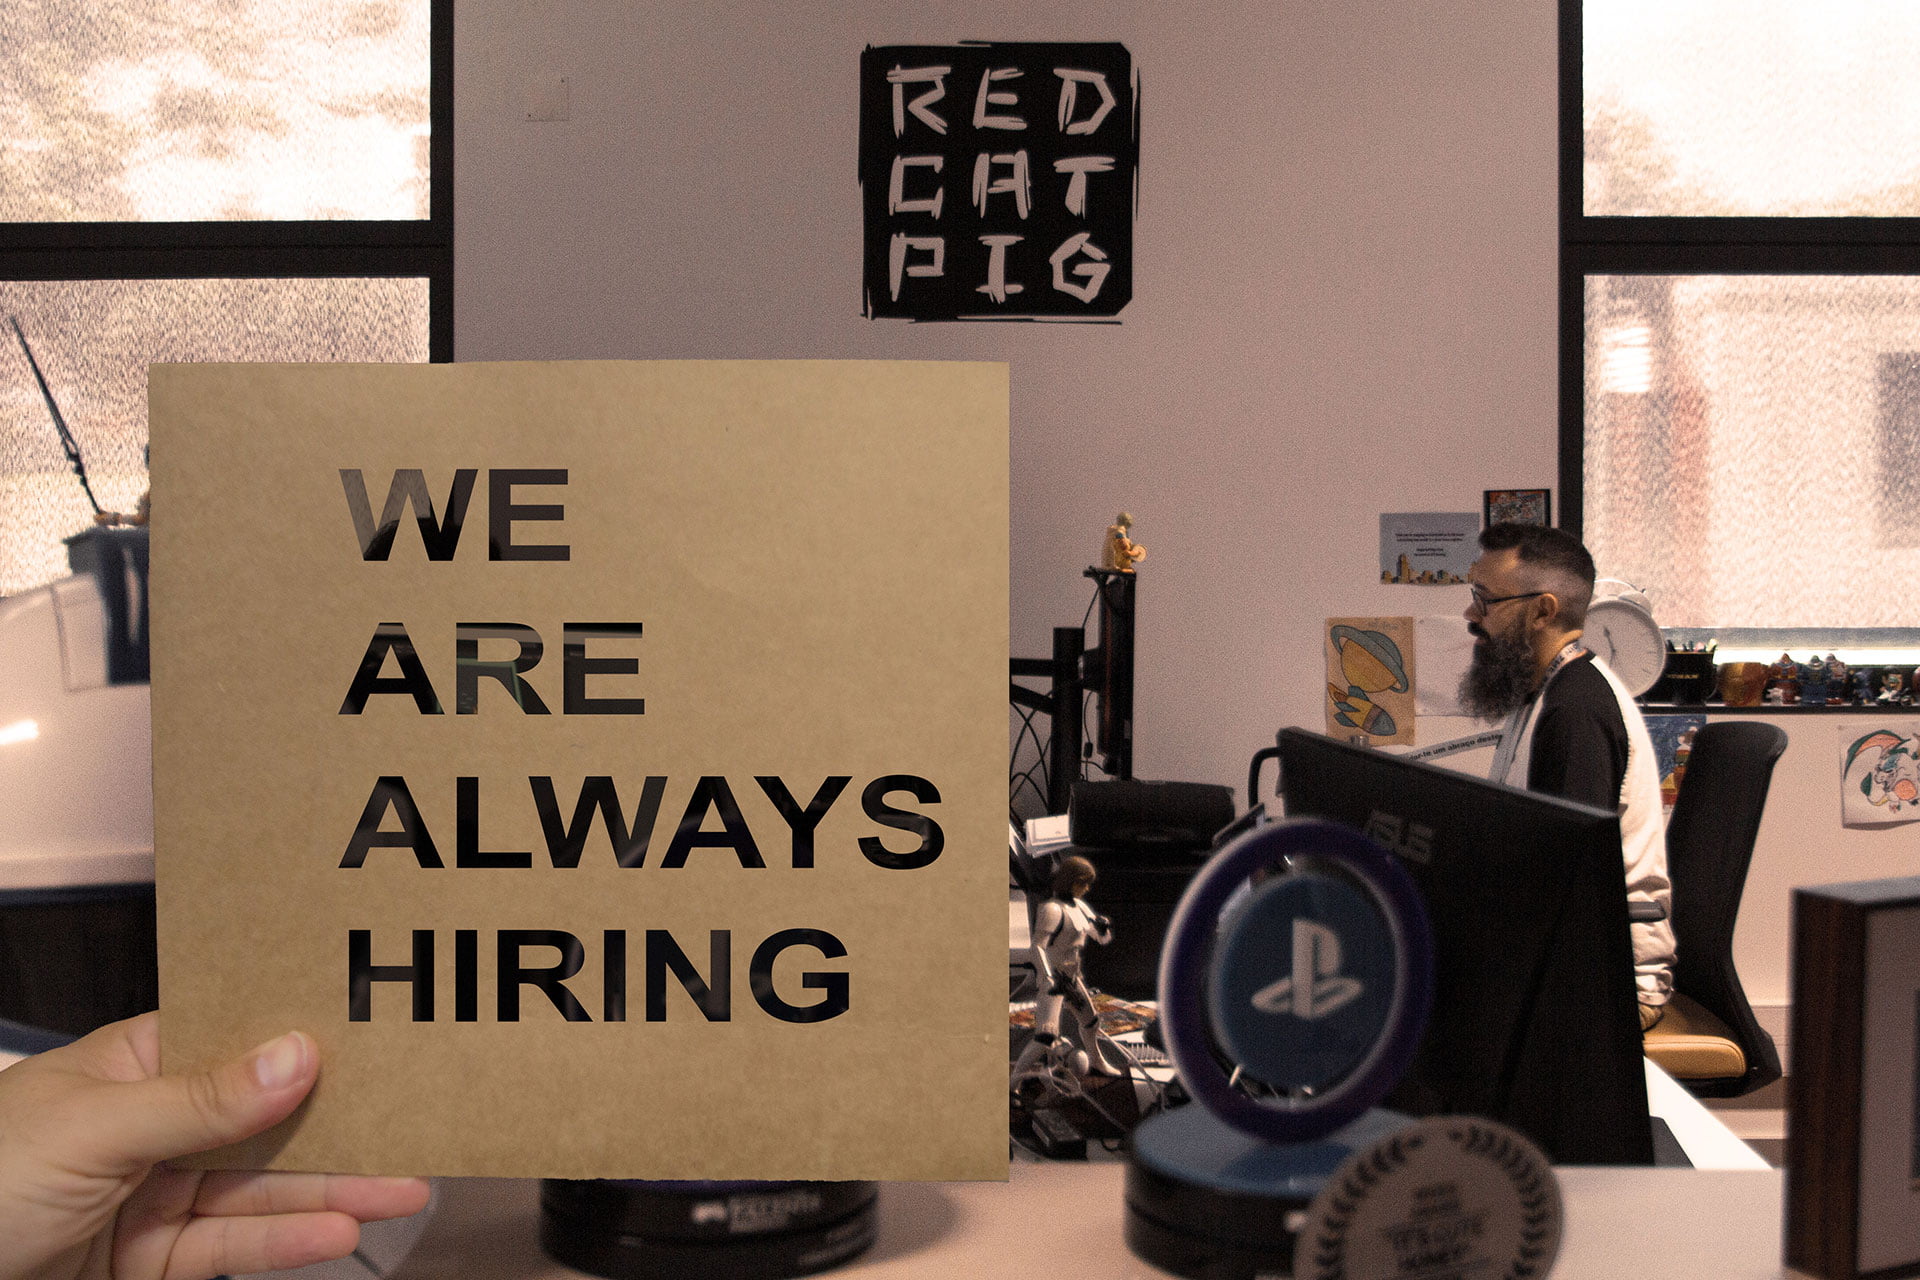 We are always hiring